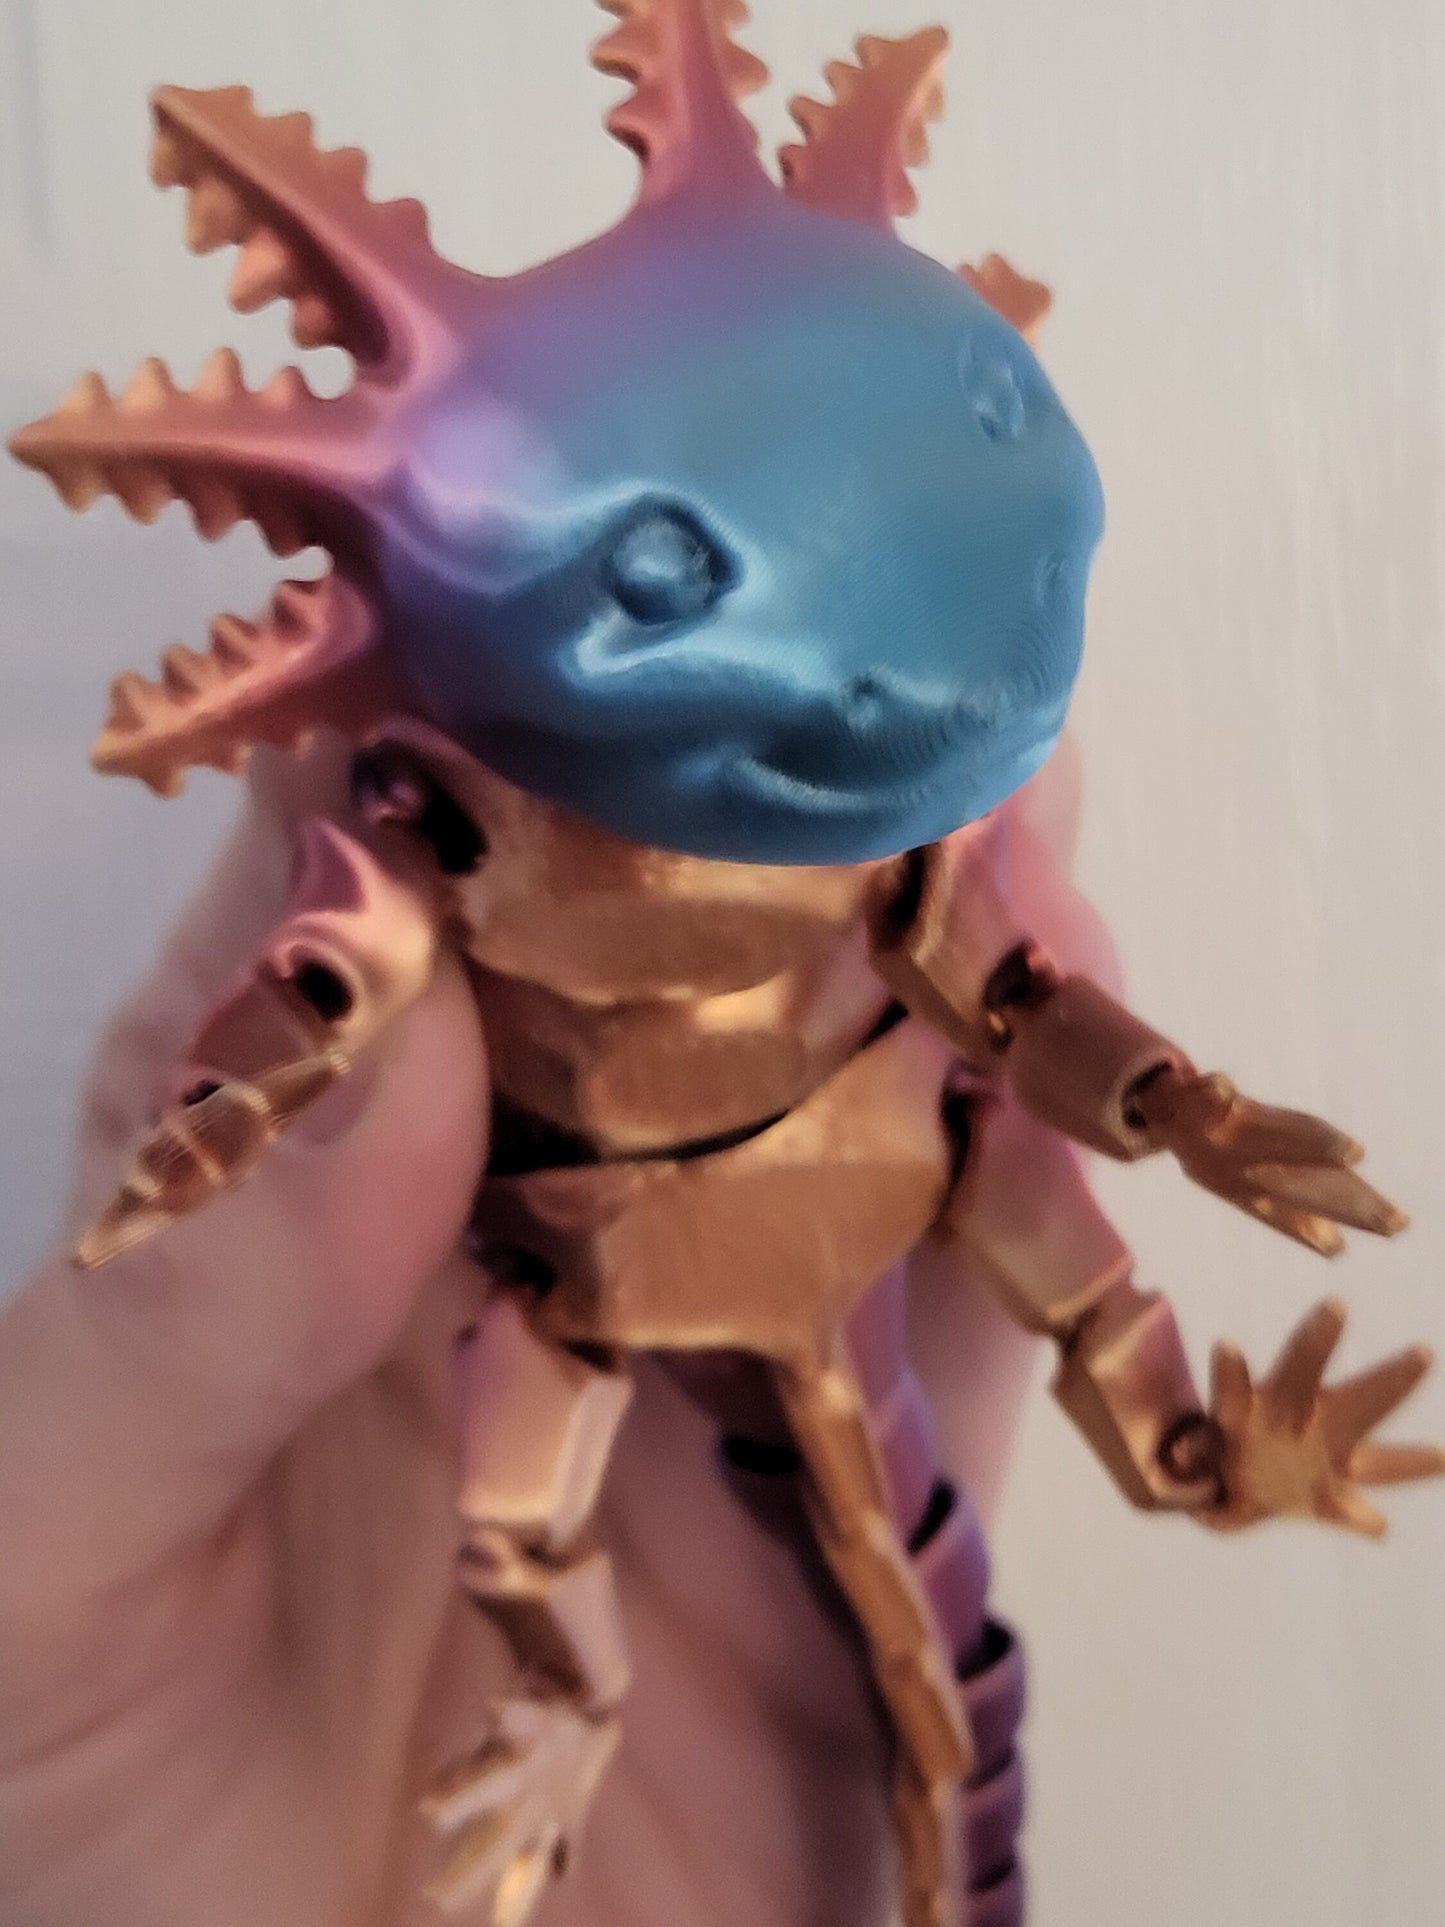 Flexible Axolotl 3D Printed Articulated Desktop Pet - Excellent Fidget Toy, Sensory Toy, or ADHD! Flexi!